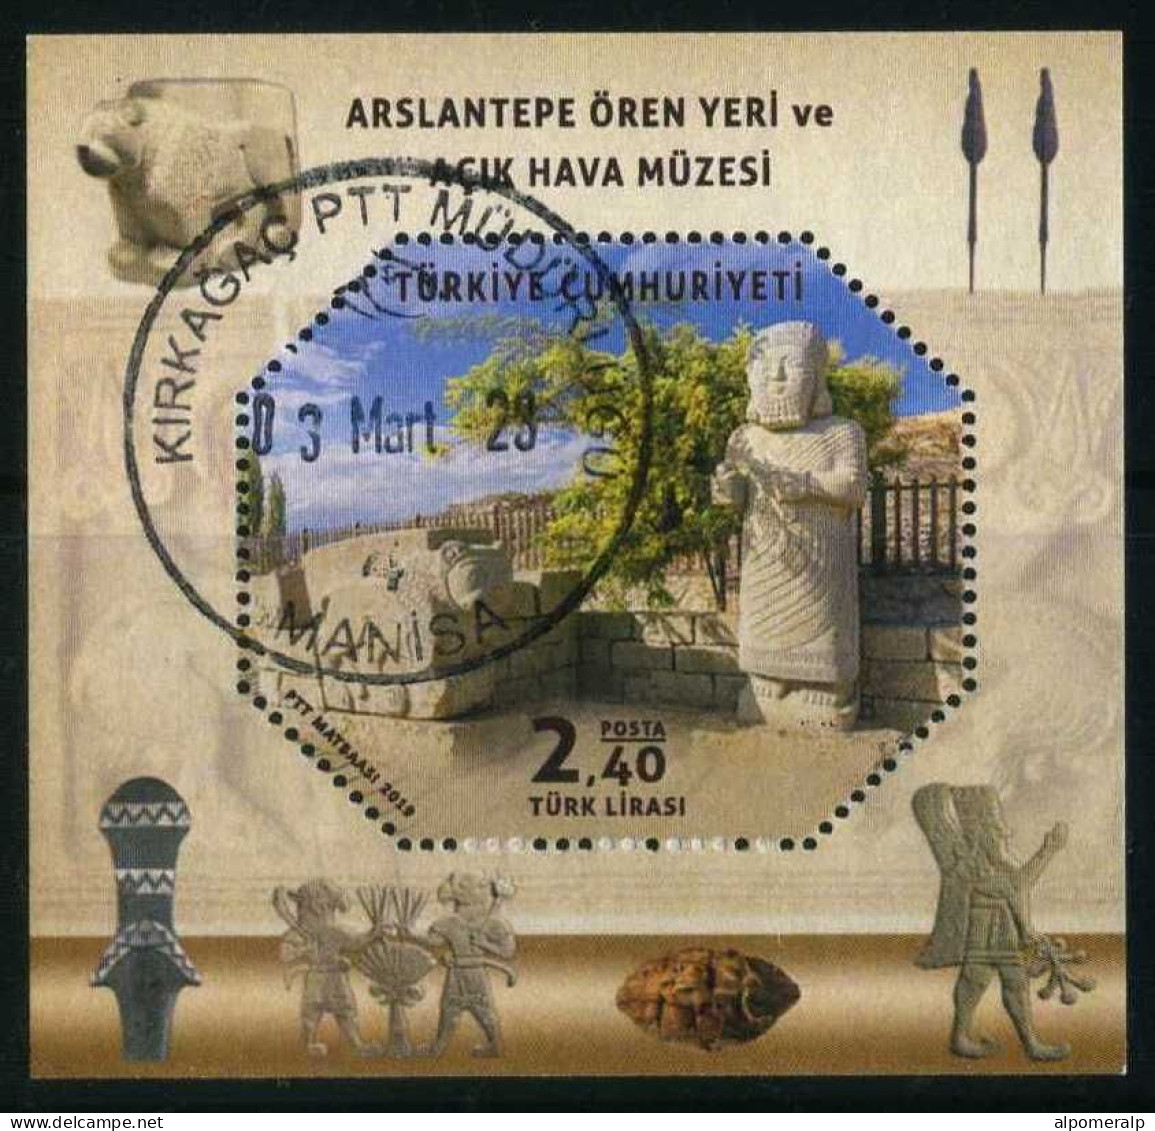 Türkiye 2019 Mi 4550 [Block 194] Arslantepe Historical Site, Archaeology, Museum - Used Stamps